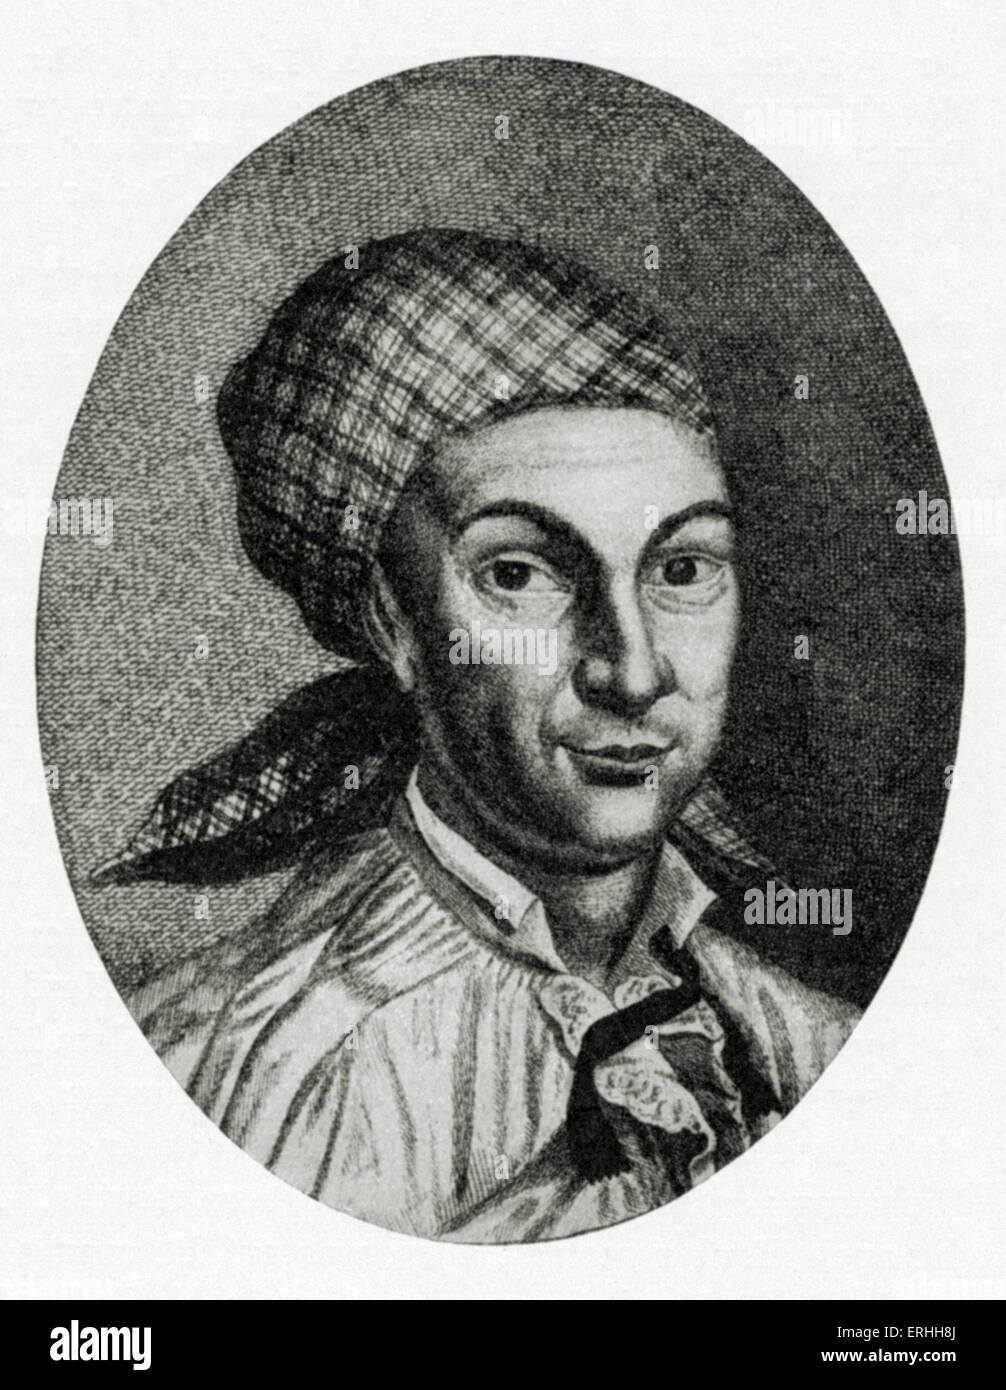 Johann Georg Hamann - portrait of the German philosopher, 27 August 1730 ...